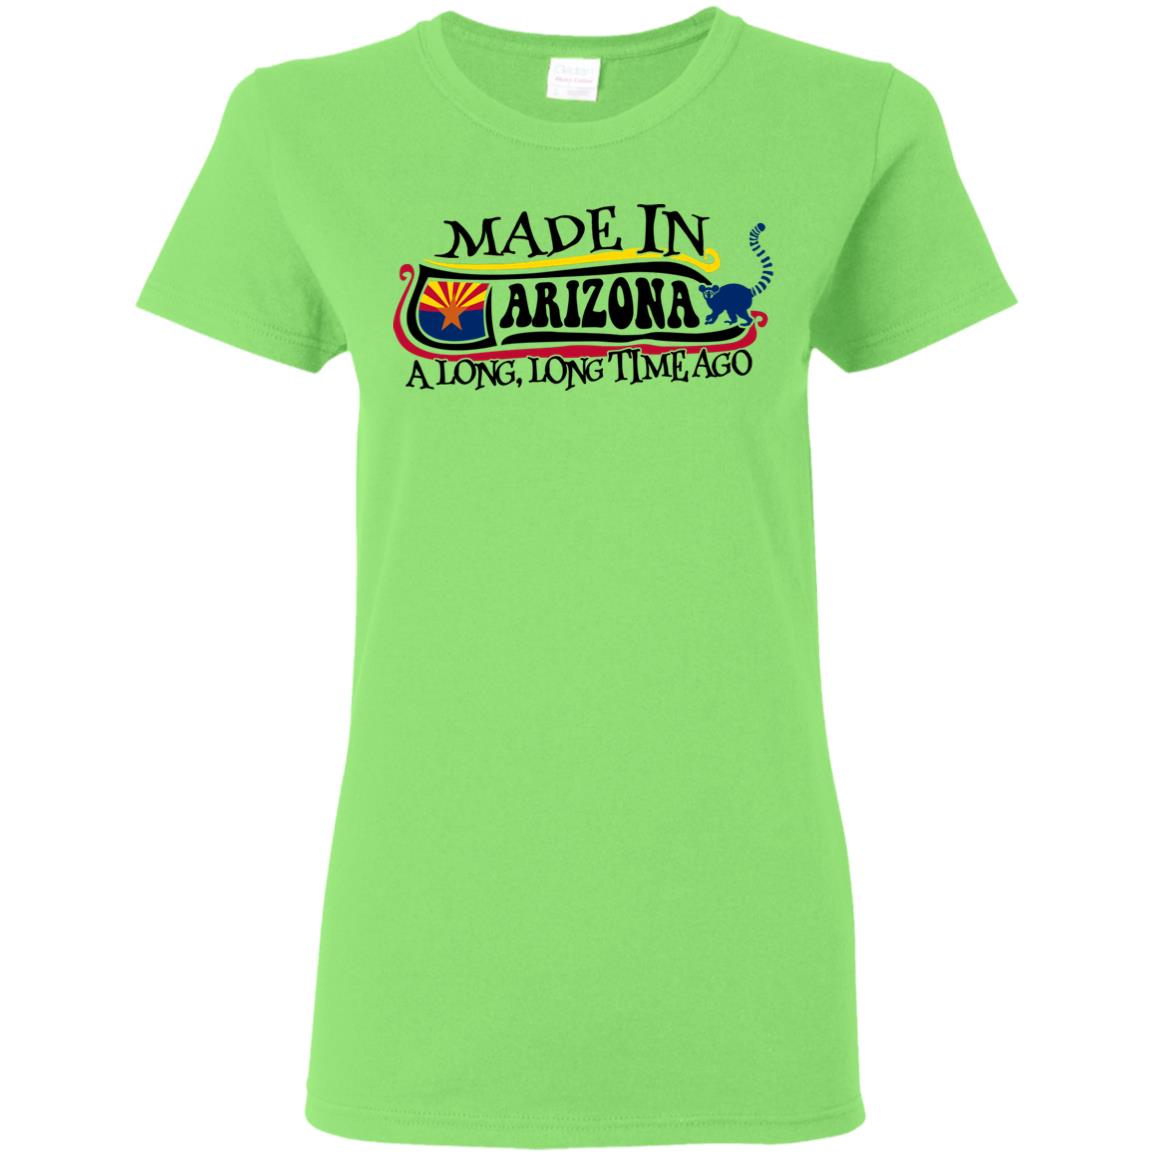 Made In North Dakota A Long Time Ago T-Shirt - Teezalo